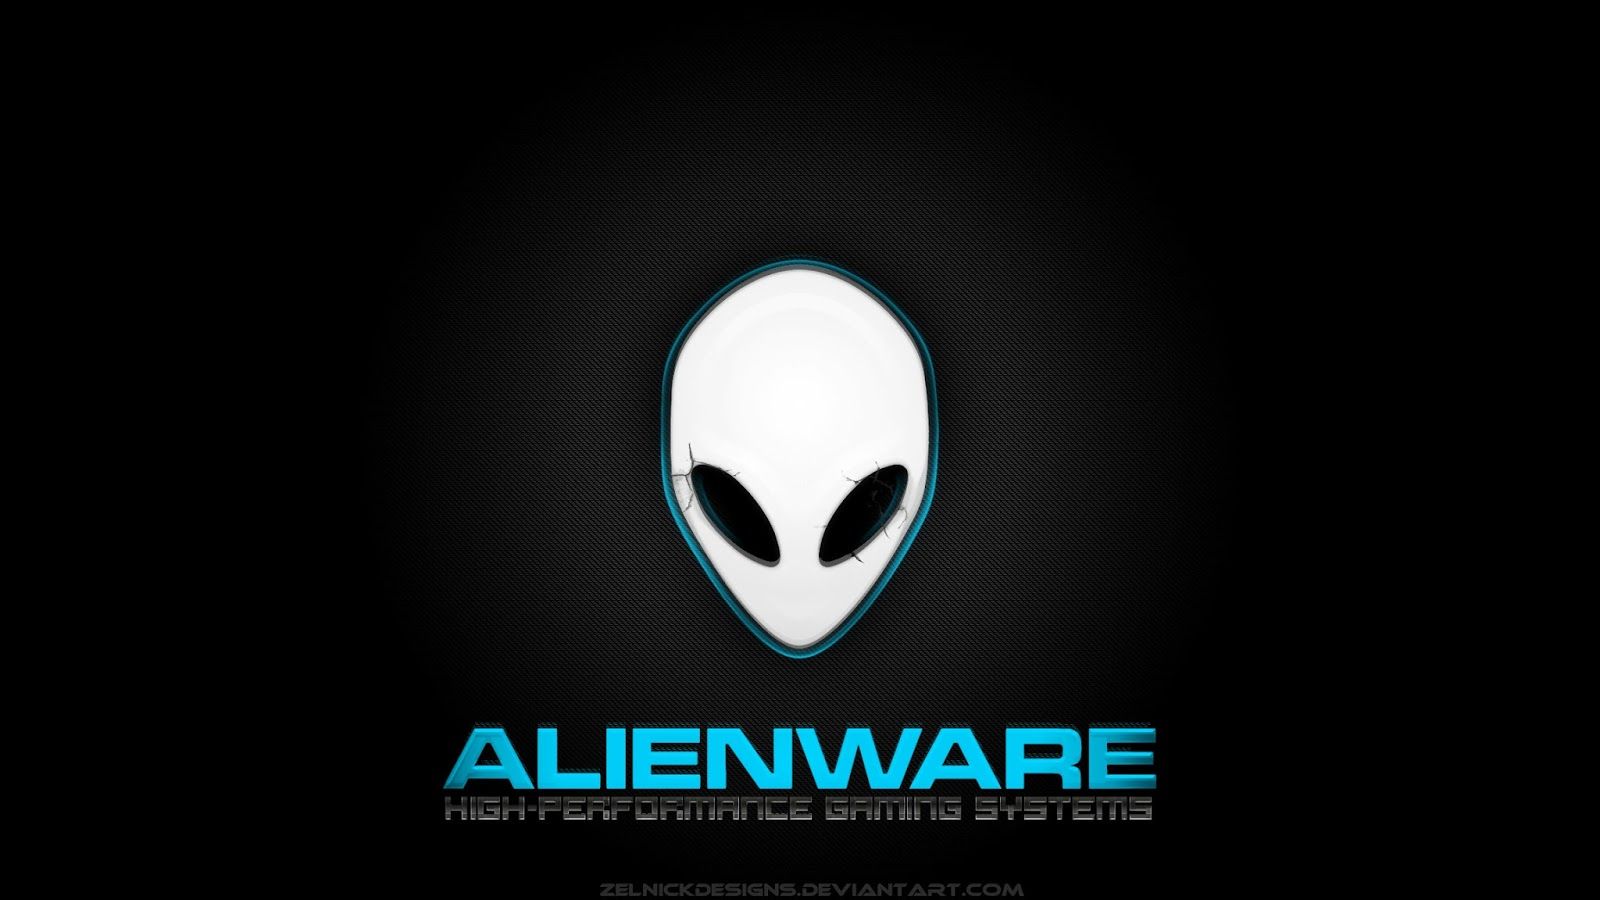 Alienware Robot Wallpaper. Alienware, Robot wallpaper, Wallpaper